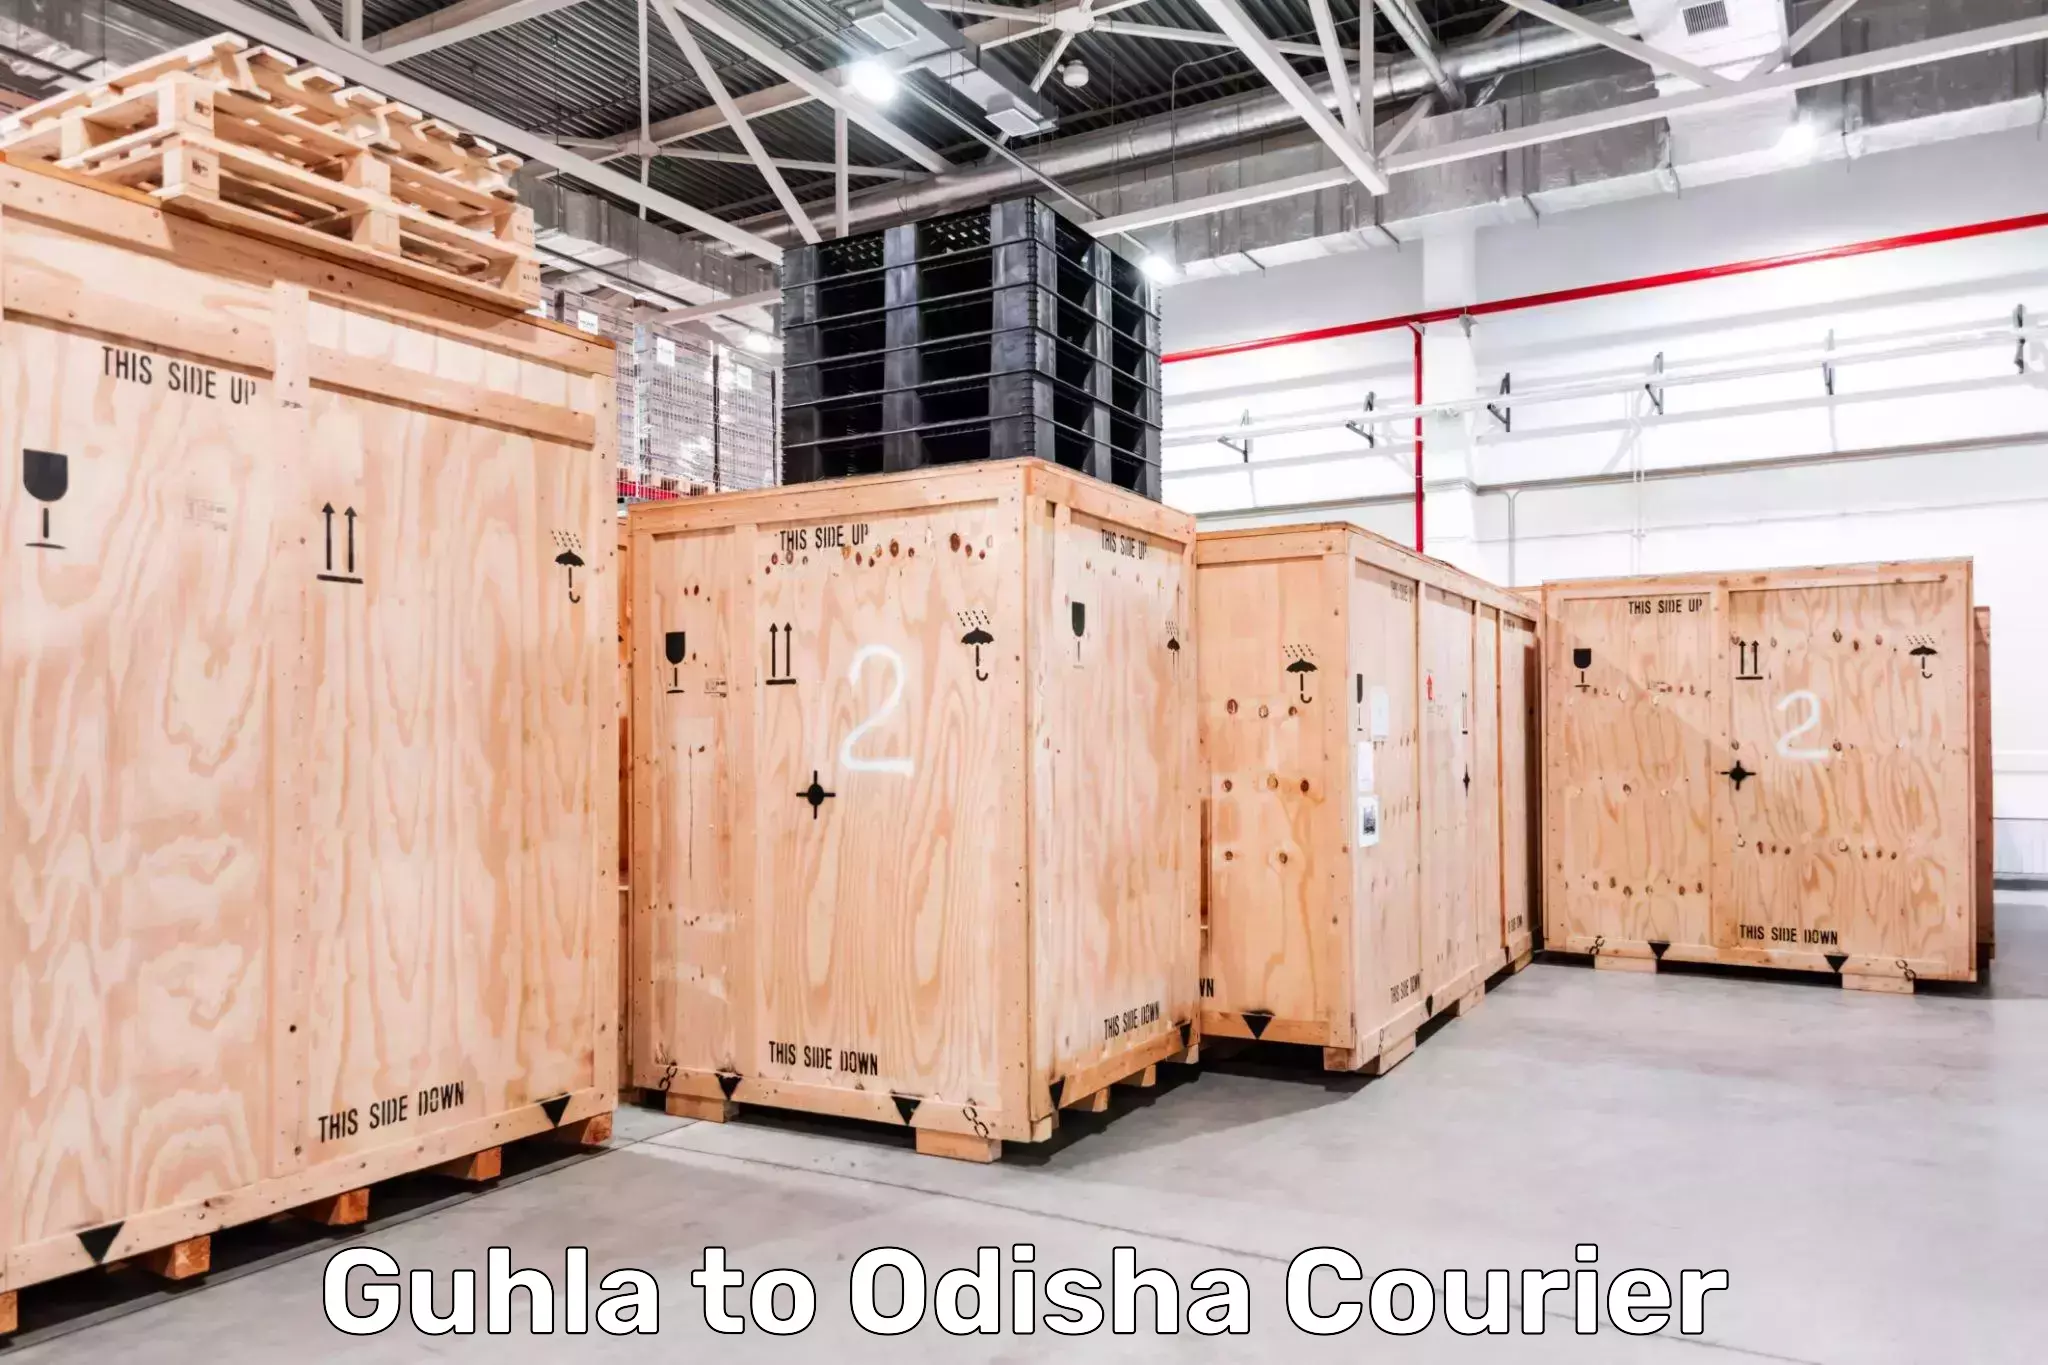 Modern delivery methods Guhla to Sambalpur